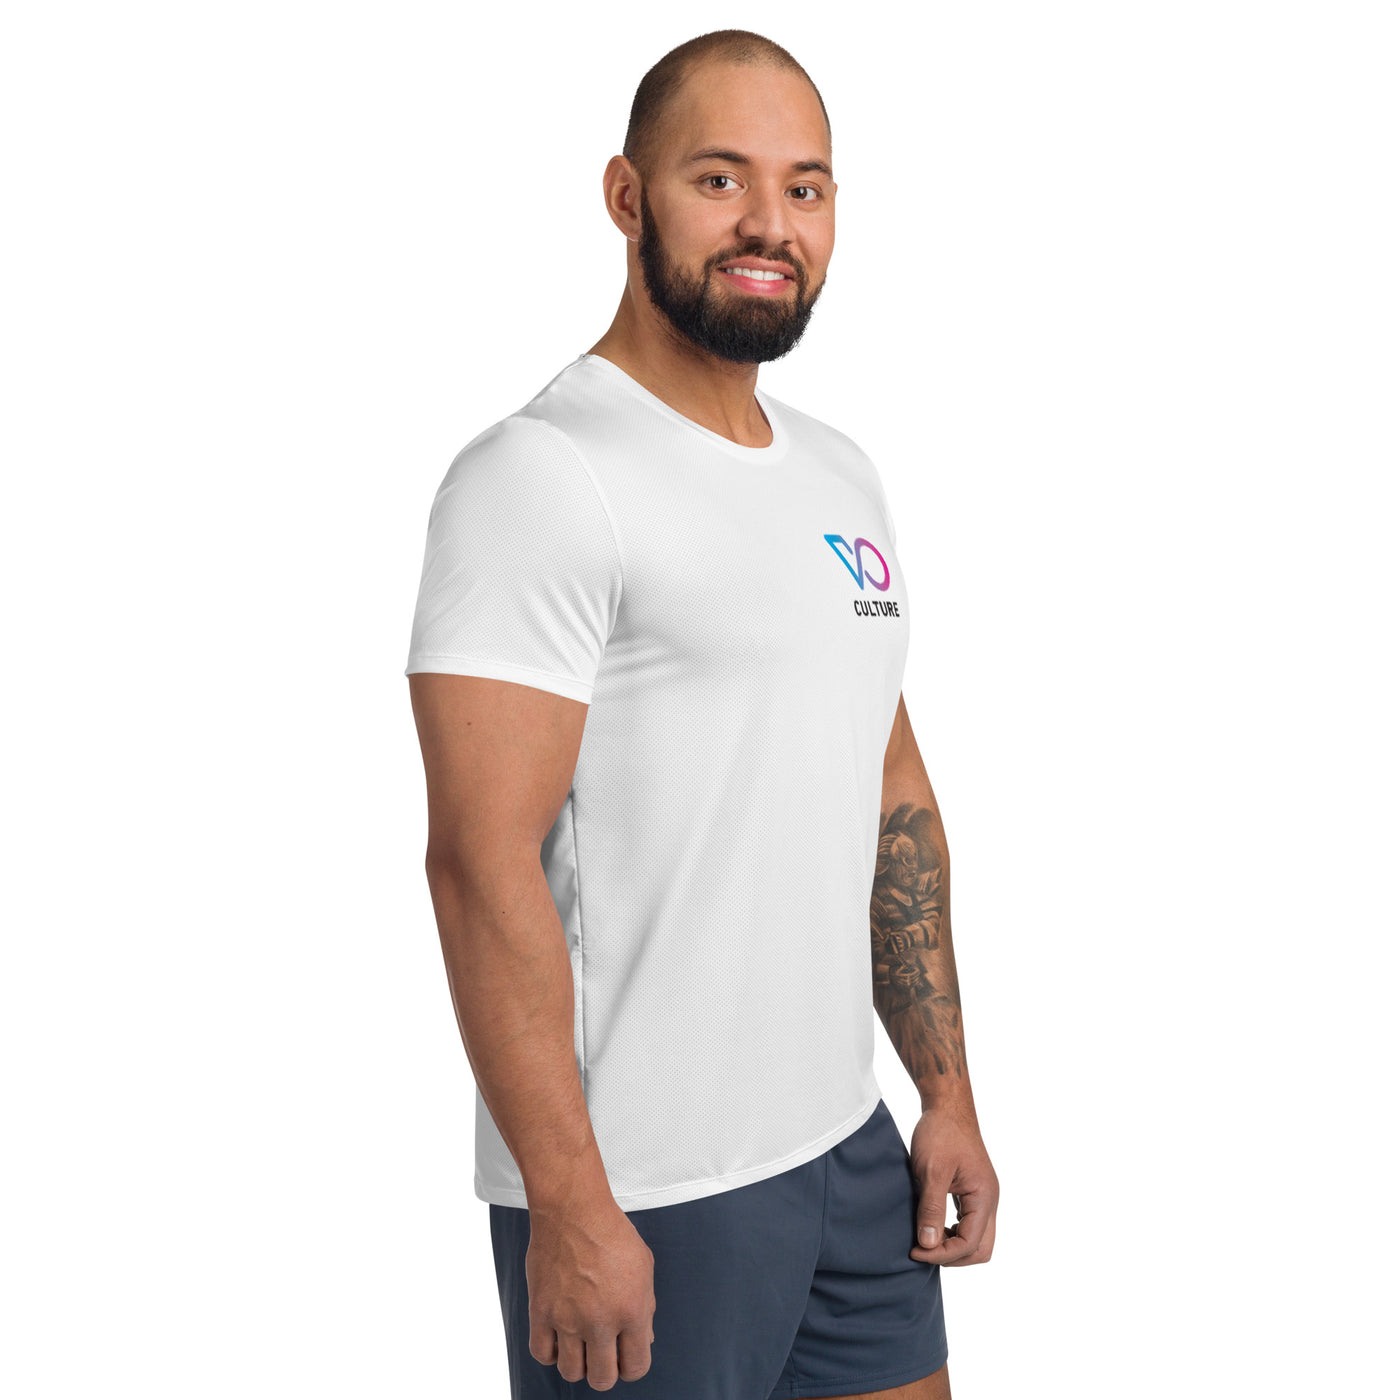 UNWAVERING Male Athletic T-shirt